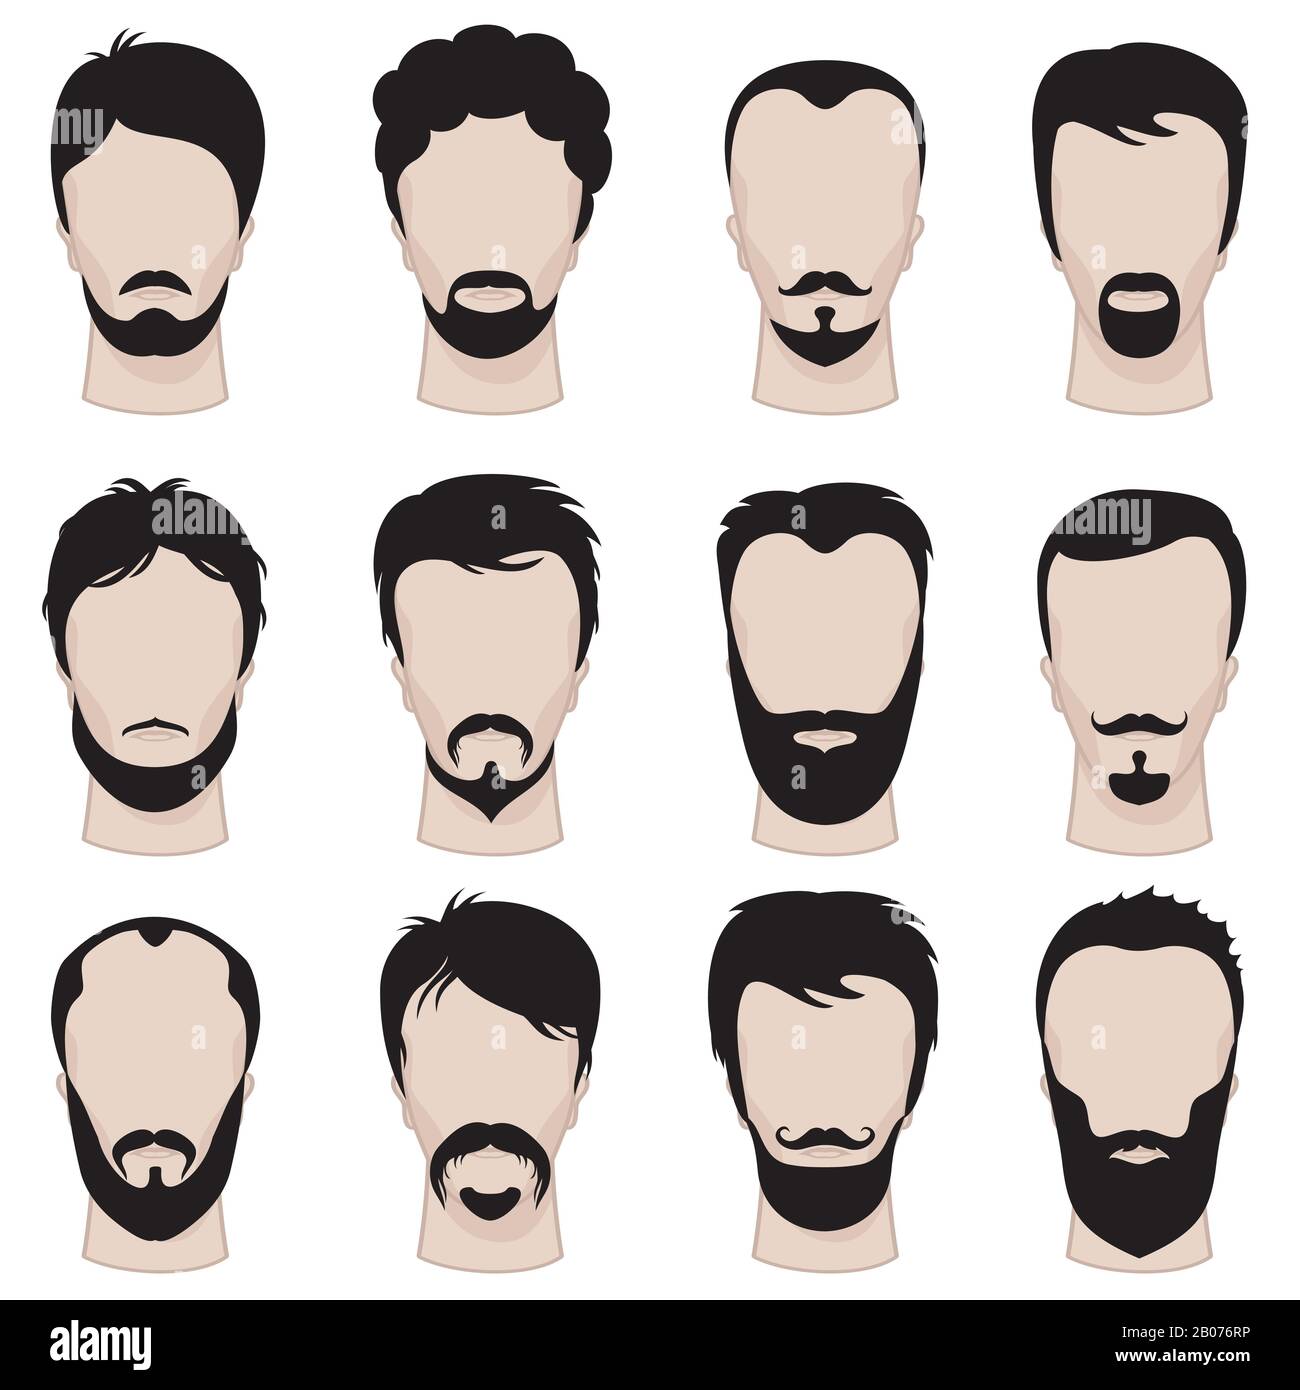 Herren Haarschnitt, Haarschnitt, Bart, Schnurrbart. Modischer Gentleman mit modischer Frisur. Vektorgrafiken Stock Vektor